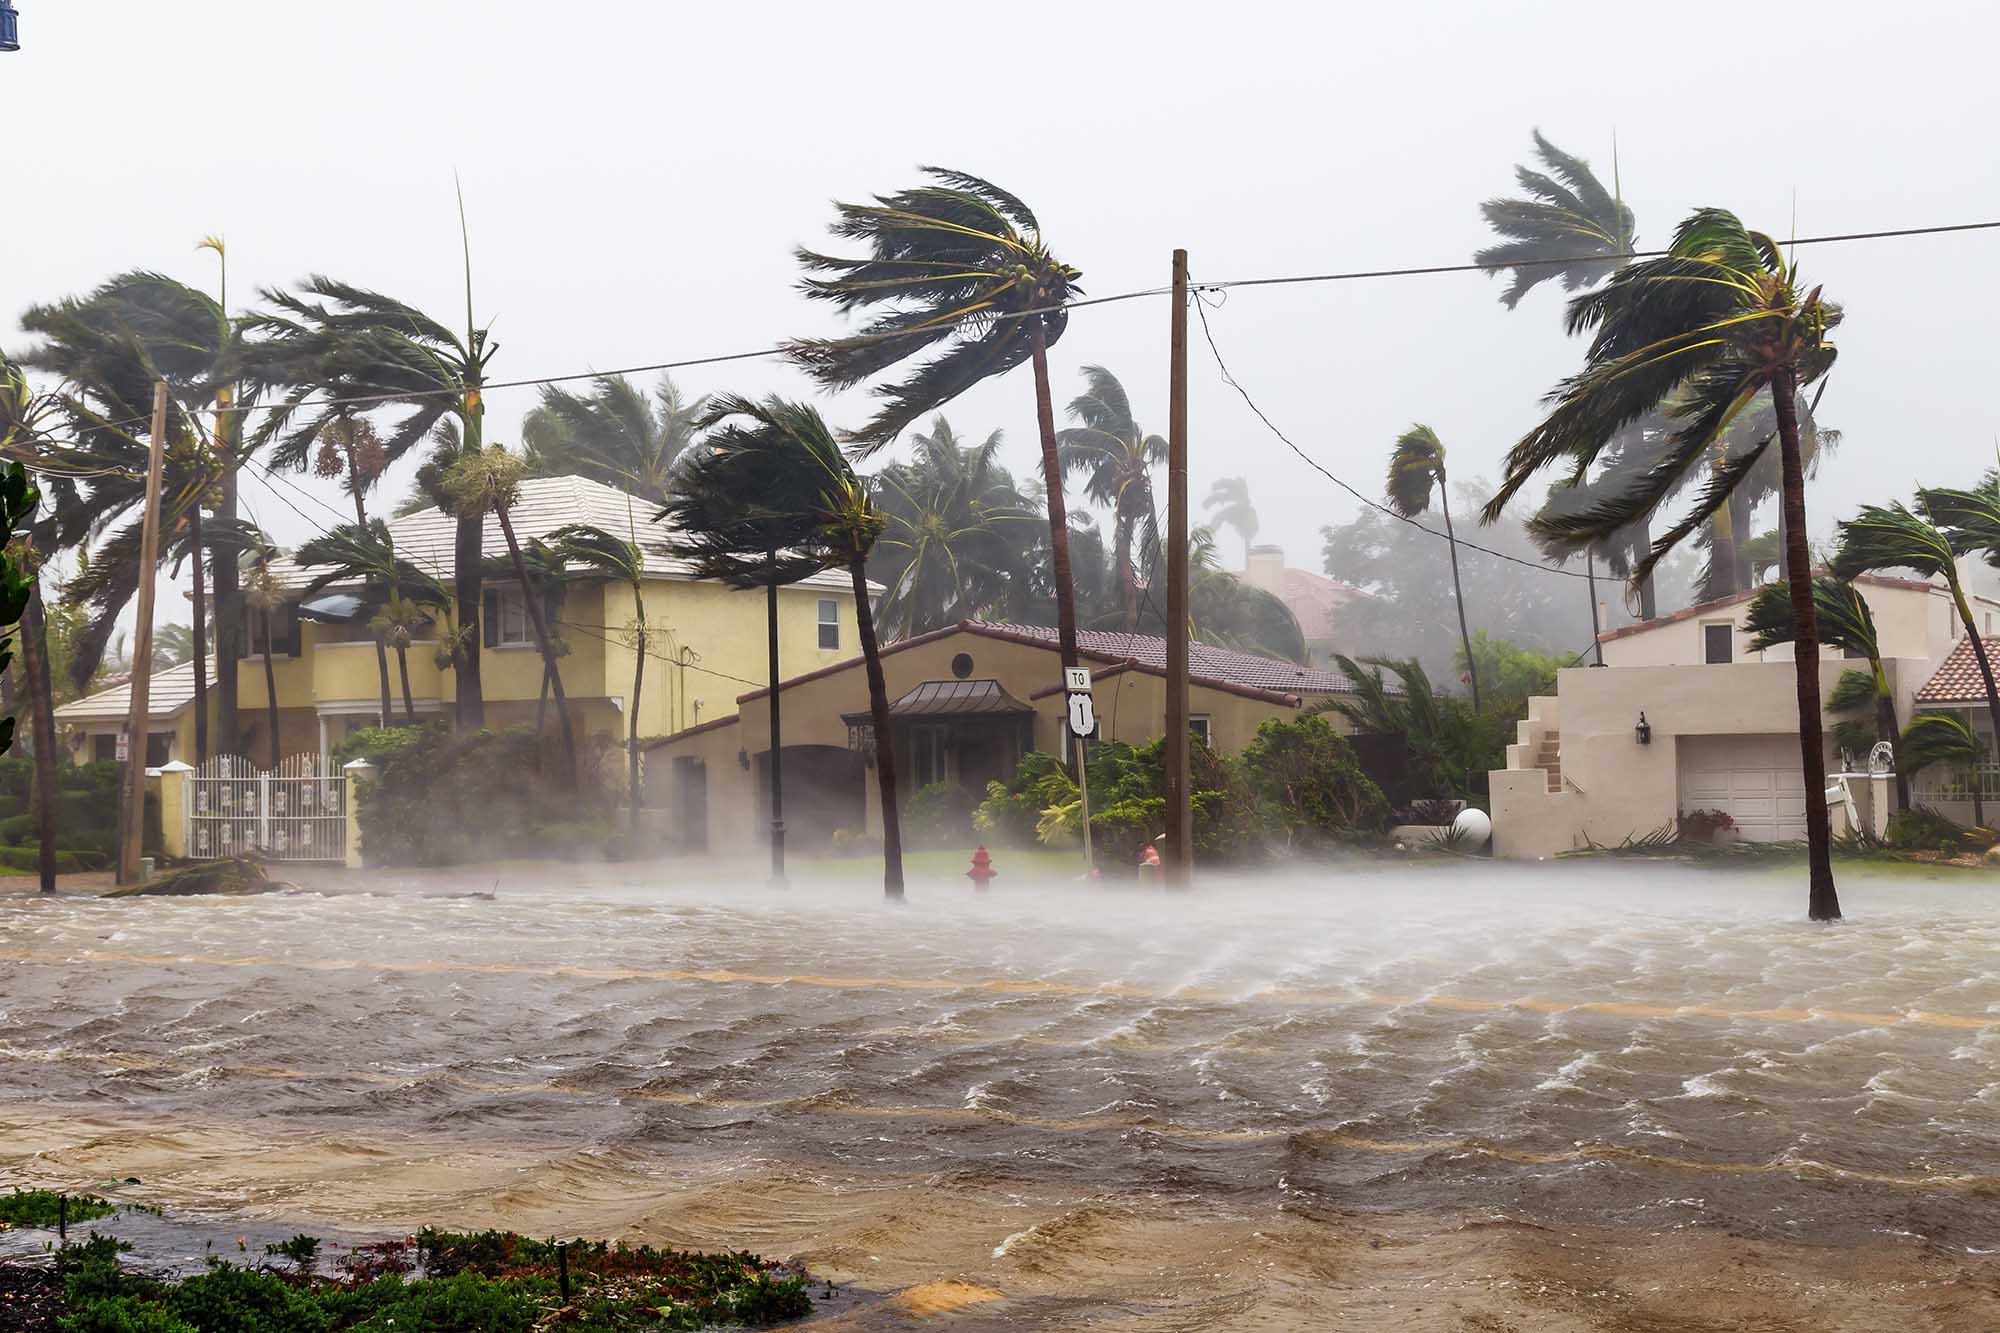 When is Hurricane Season in Florida?